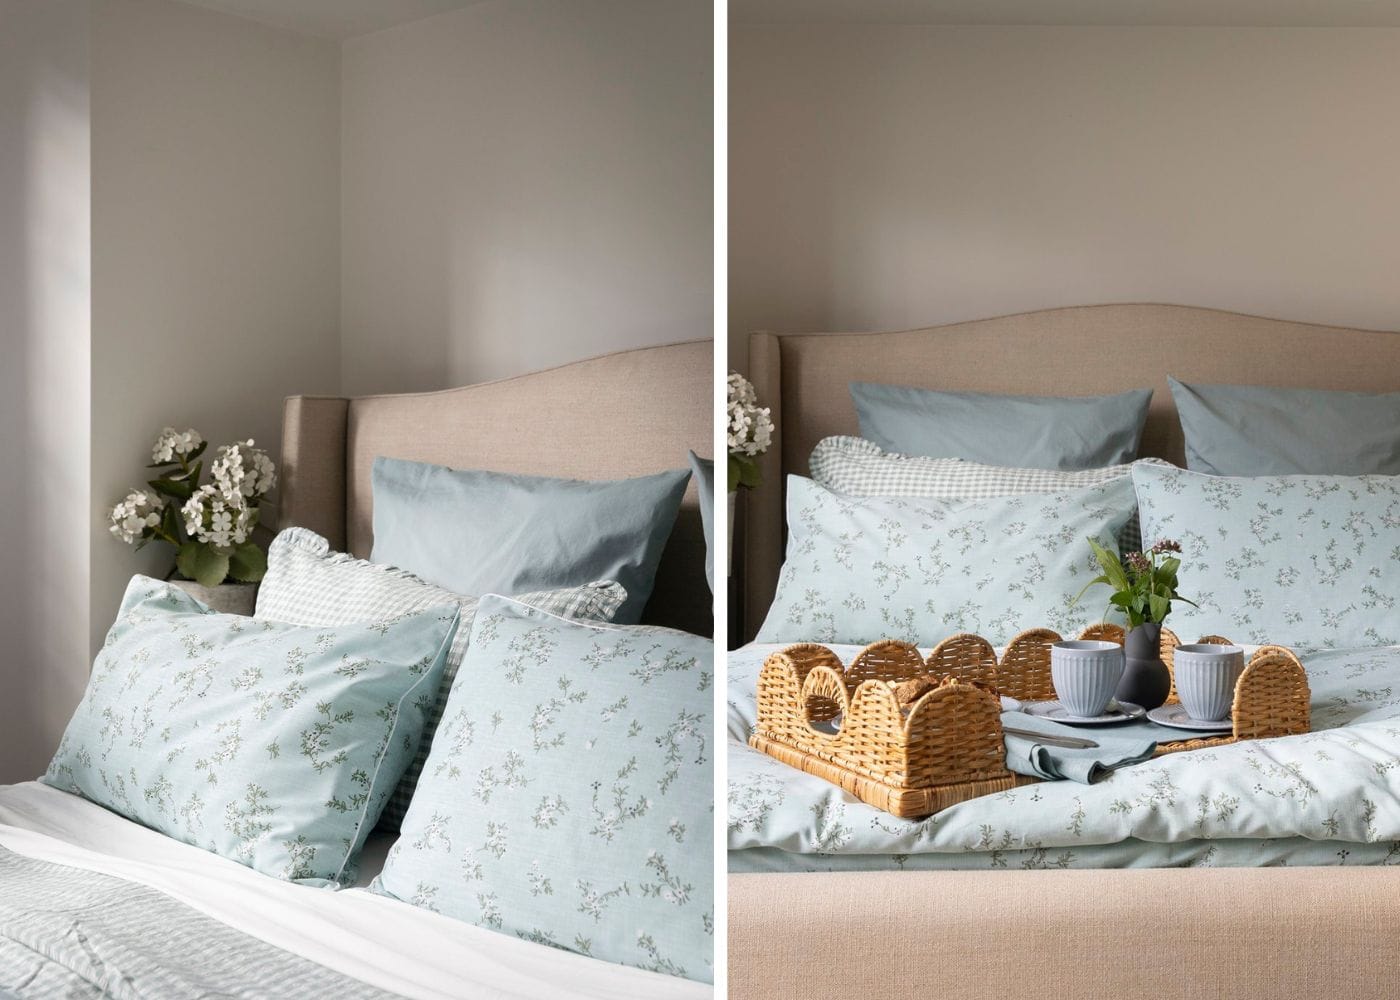 Chyka keebaugh's guest bedroom design featuring a linen bed head